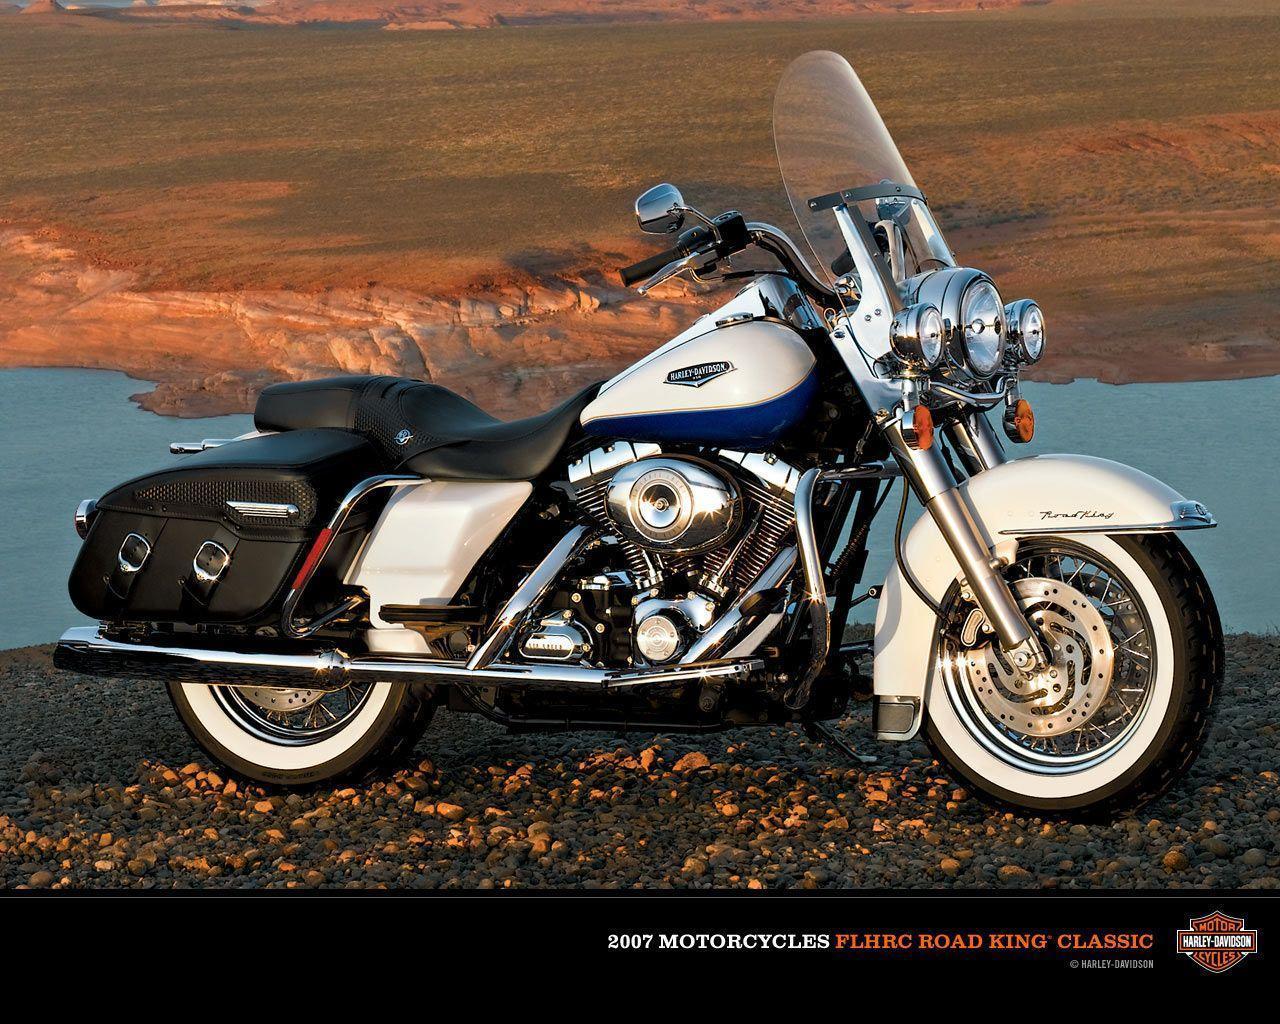 Best ideas about Harley Davidson Wallpaper